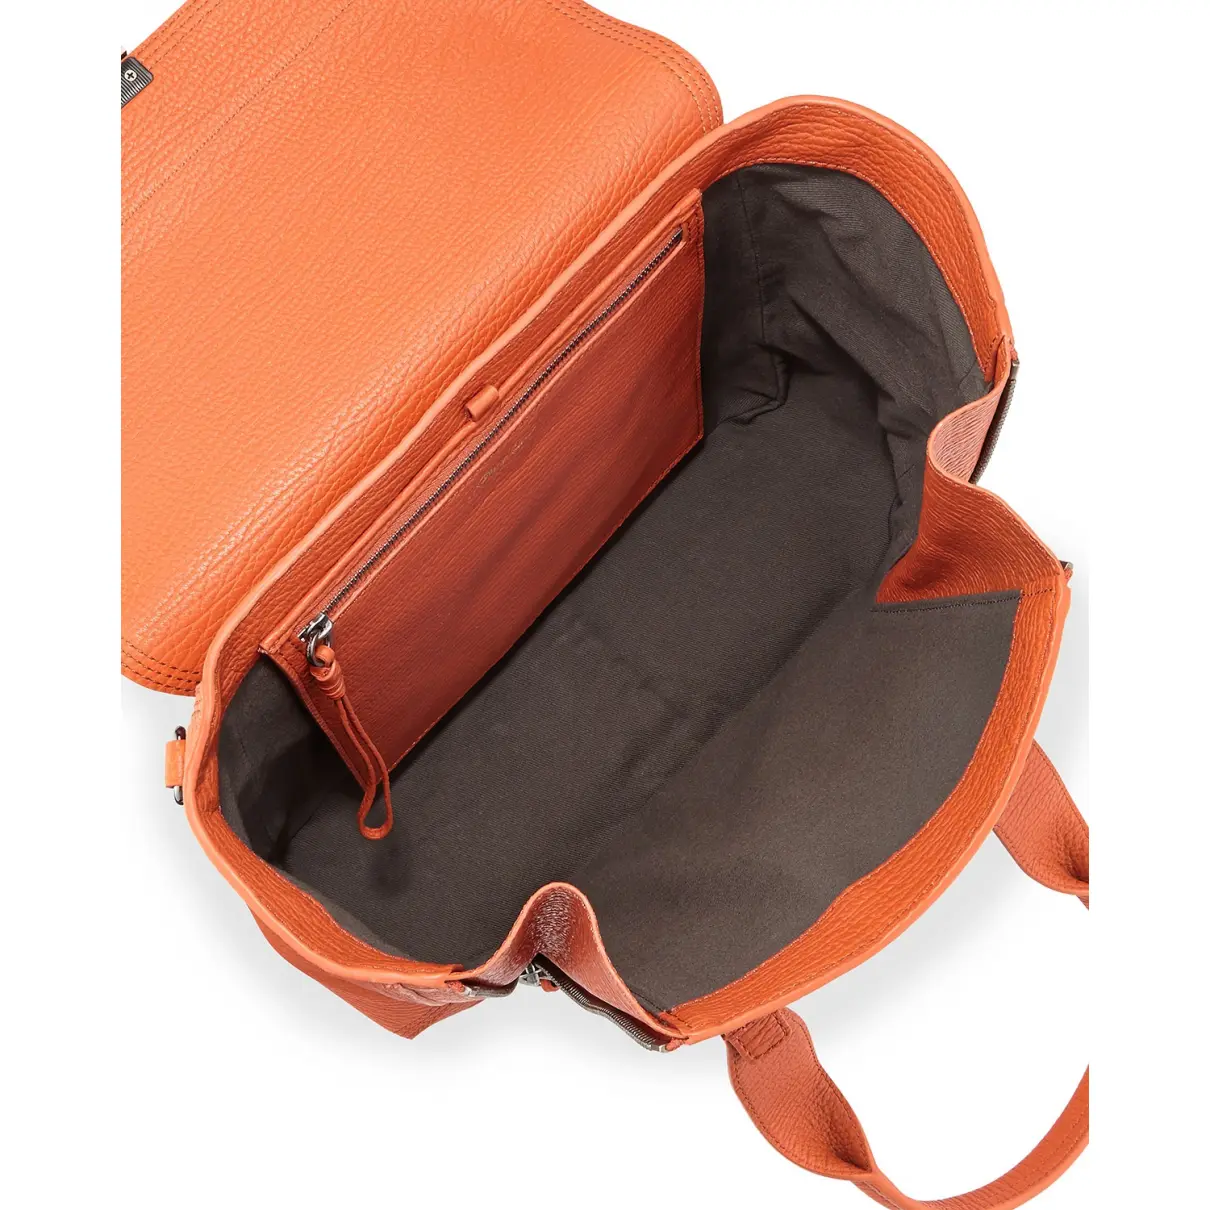 Buy 3.1 Phillip Lim Leather satchel online